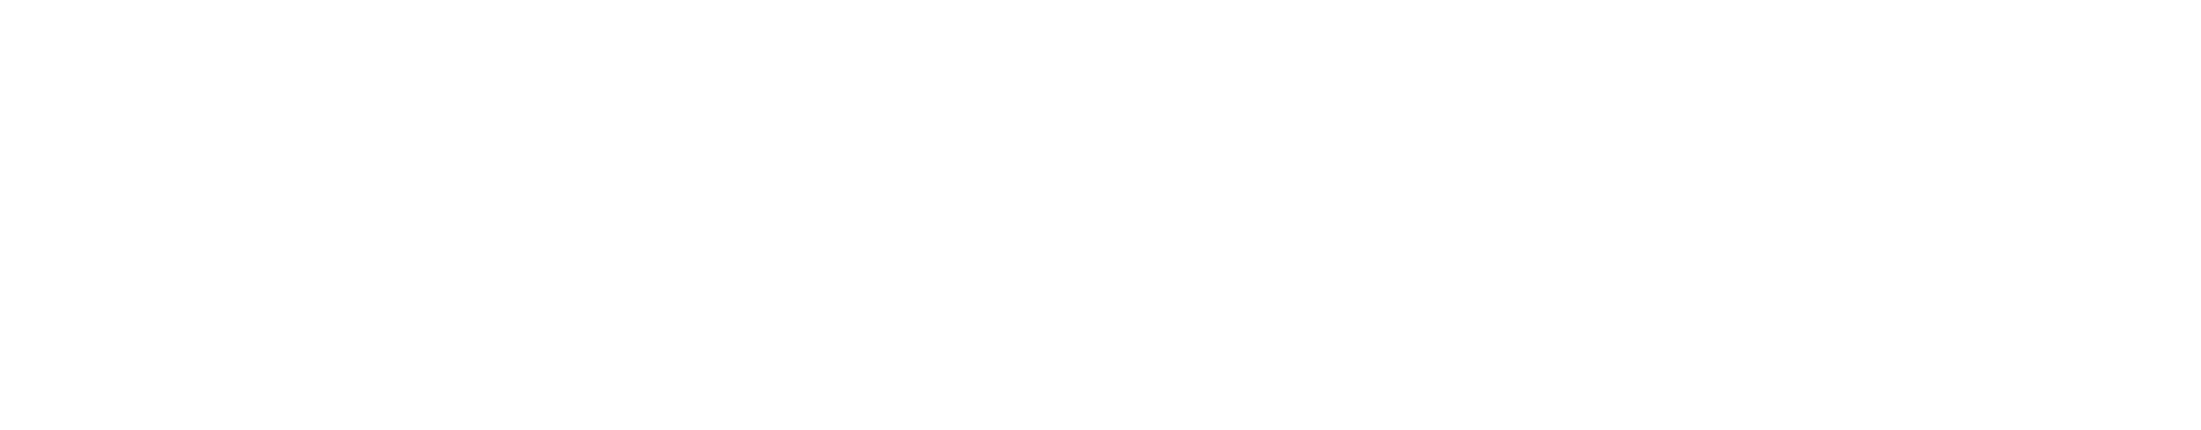 TutorMe logo